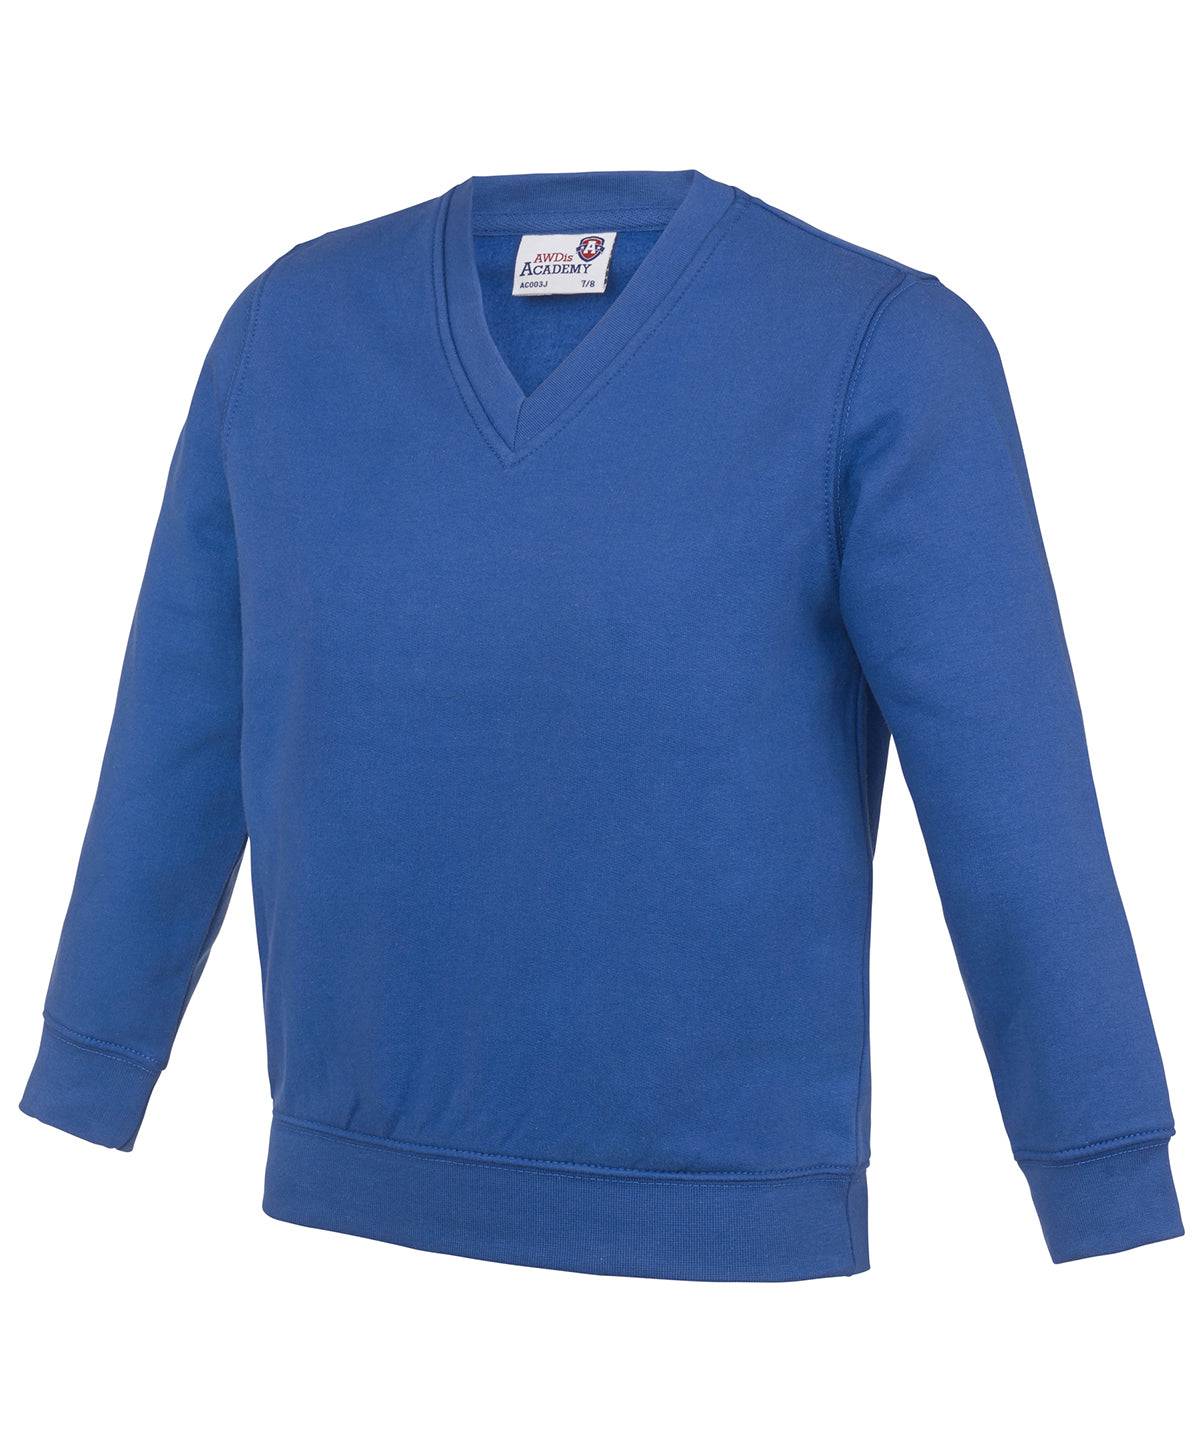 Academy Royal Blue - Kids Academy v-neck sweatshirt